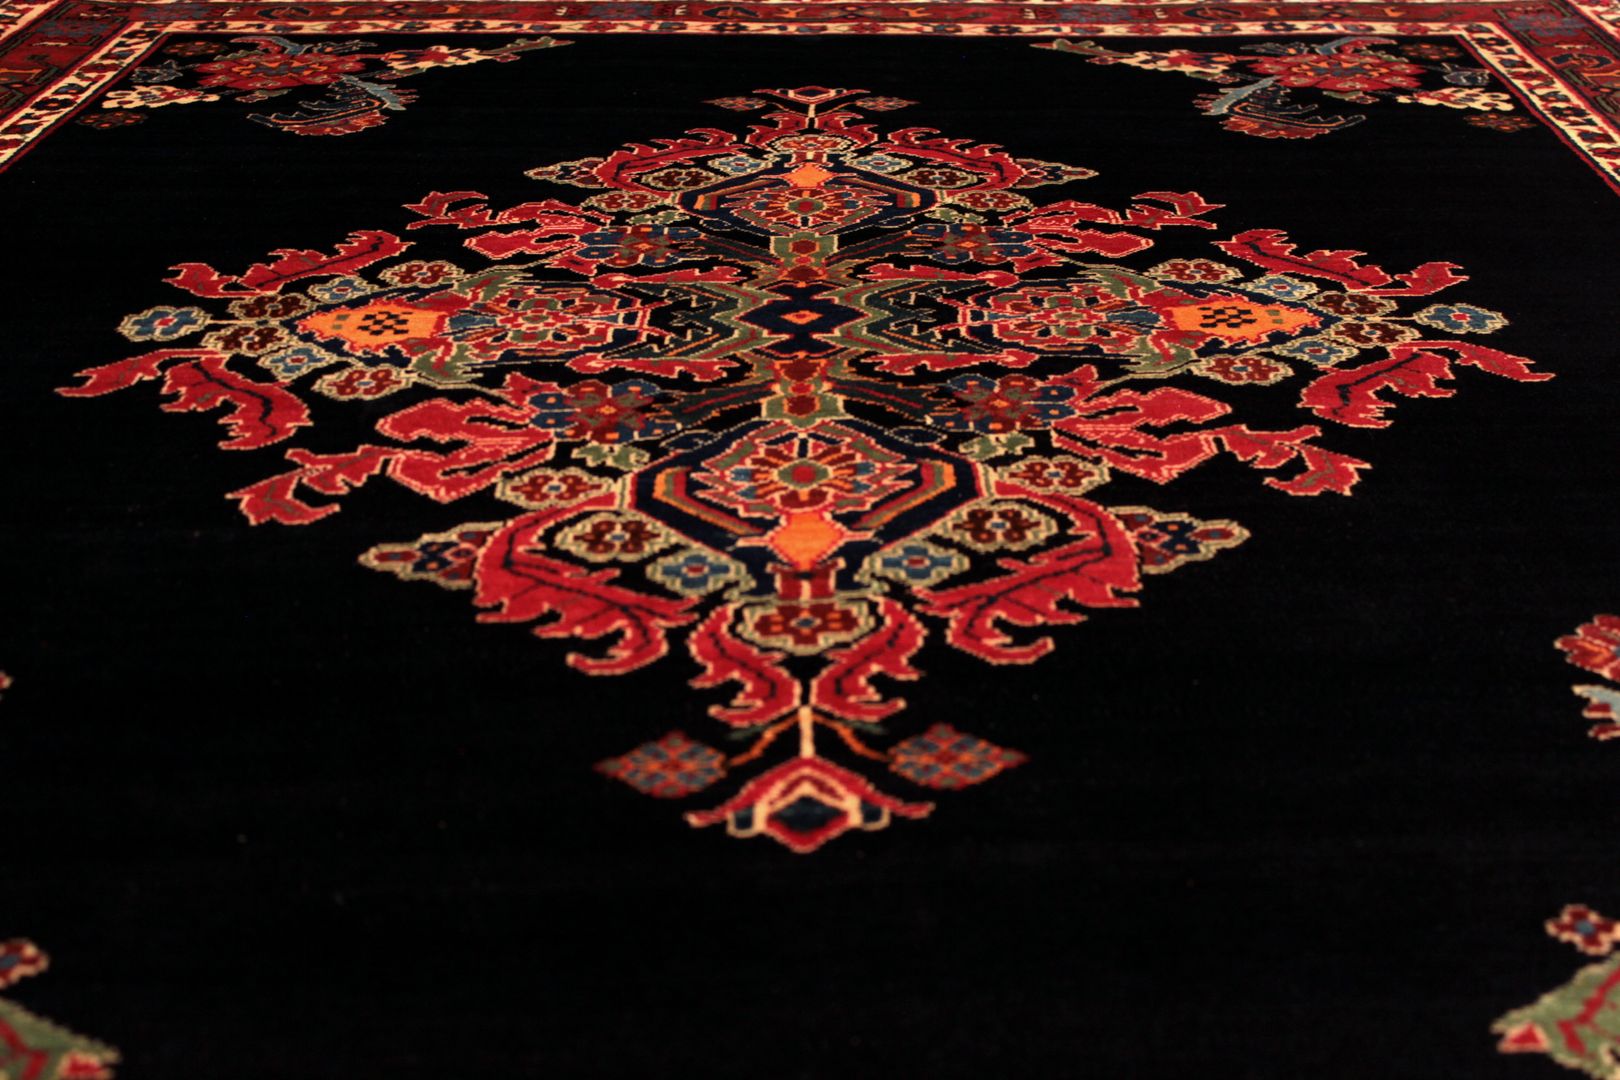 Irańskie dywany tradycyjne, Sarmatia Trading Sarmatia Trading Floors صوف Orange Carpets & rugs